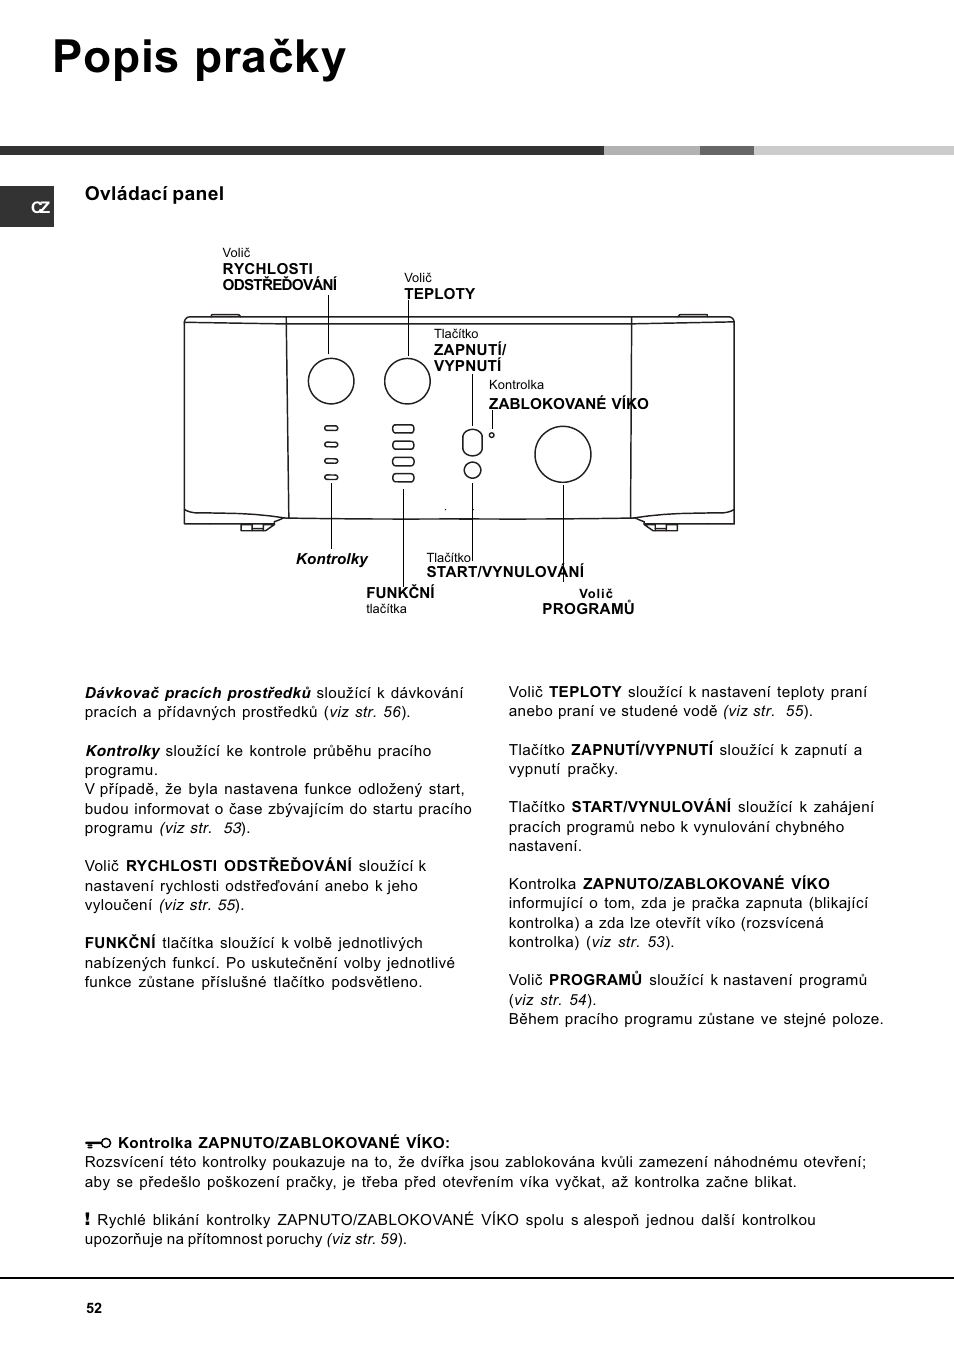 Popis praèky, Ovládací panel | Hotpoint Ariston AVTL 104 User Manual | Page  52 / 60 | Original mode